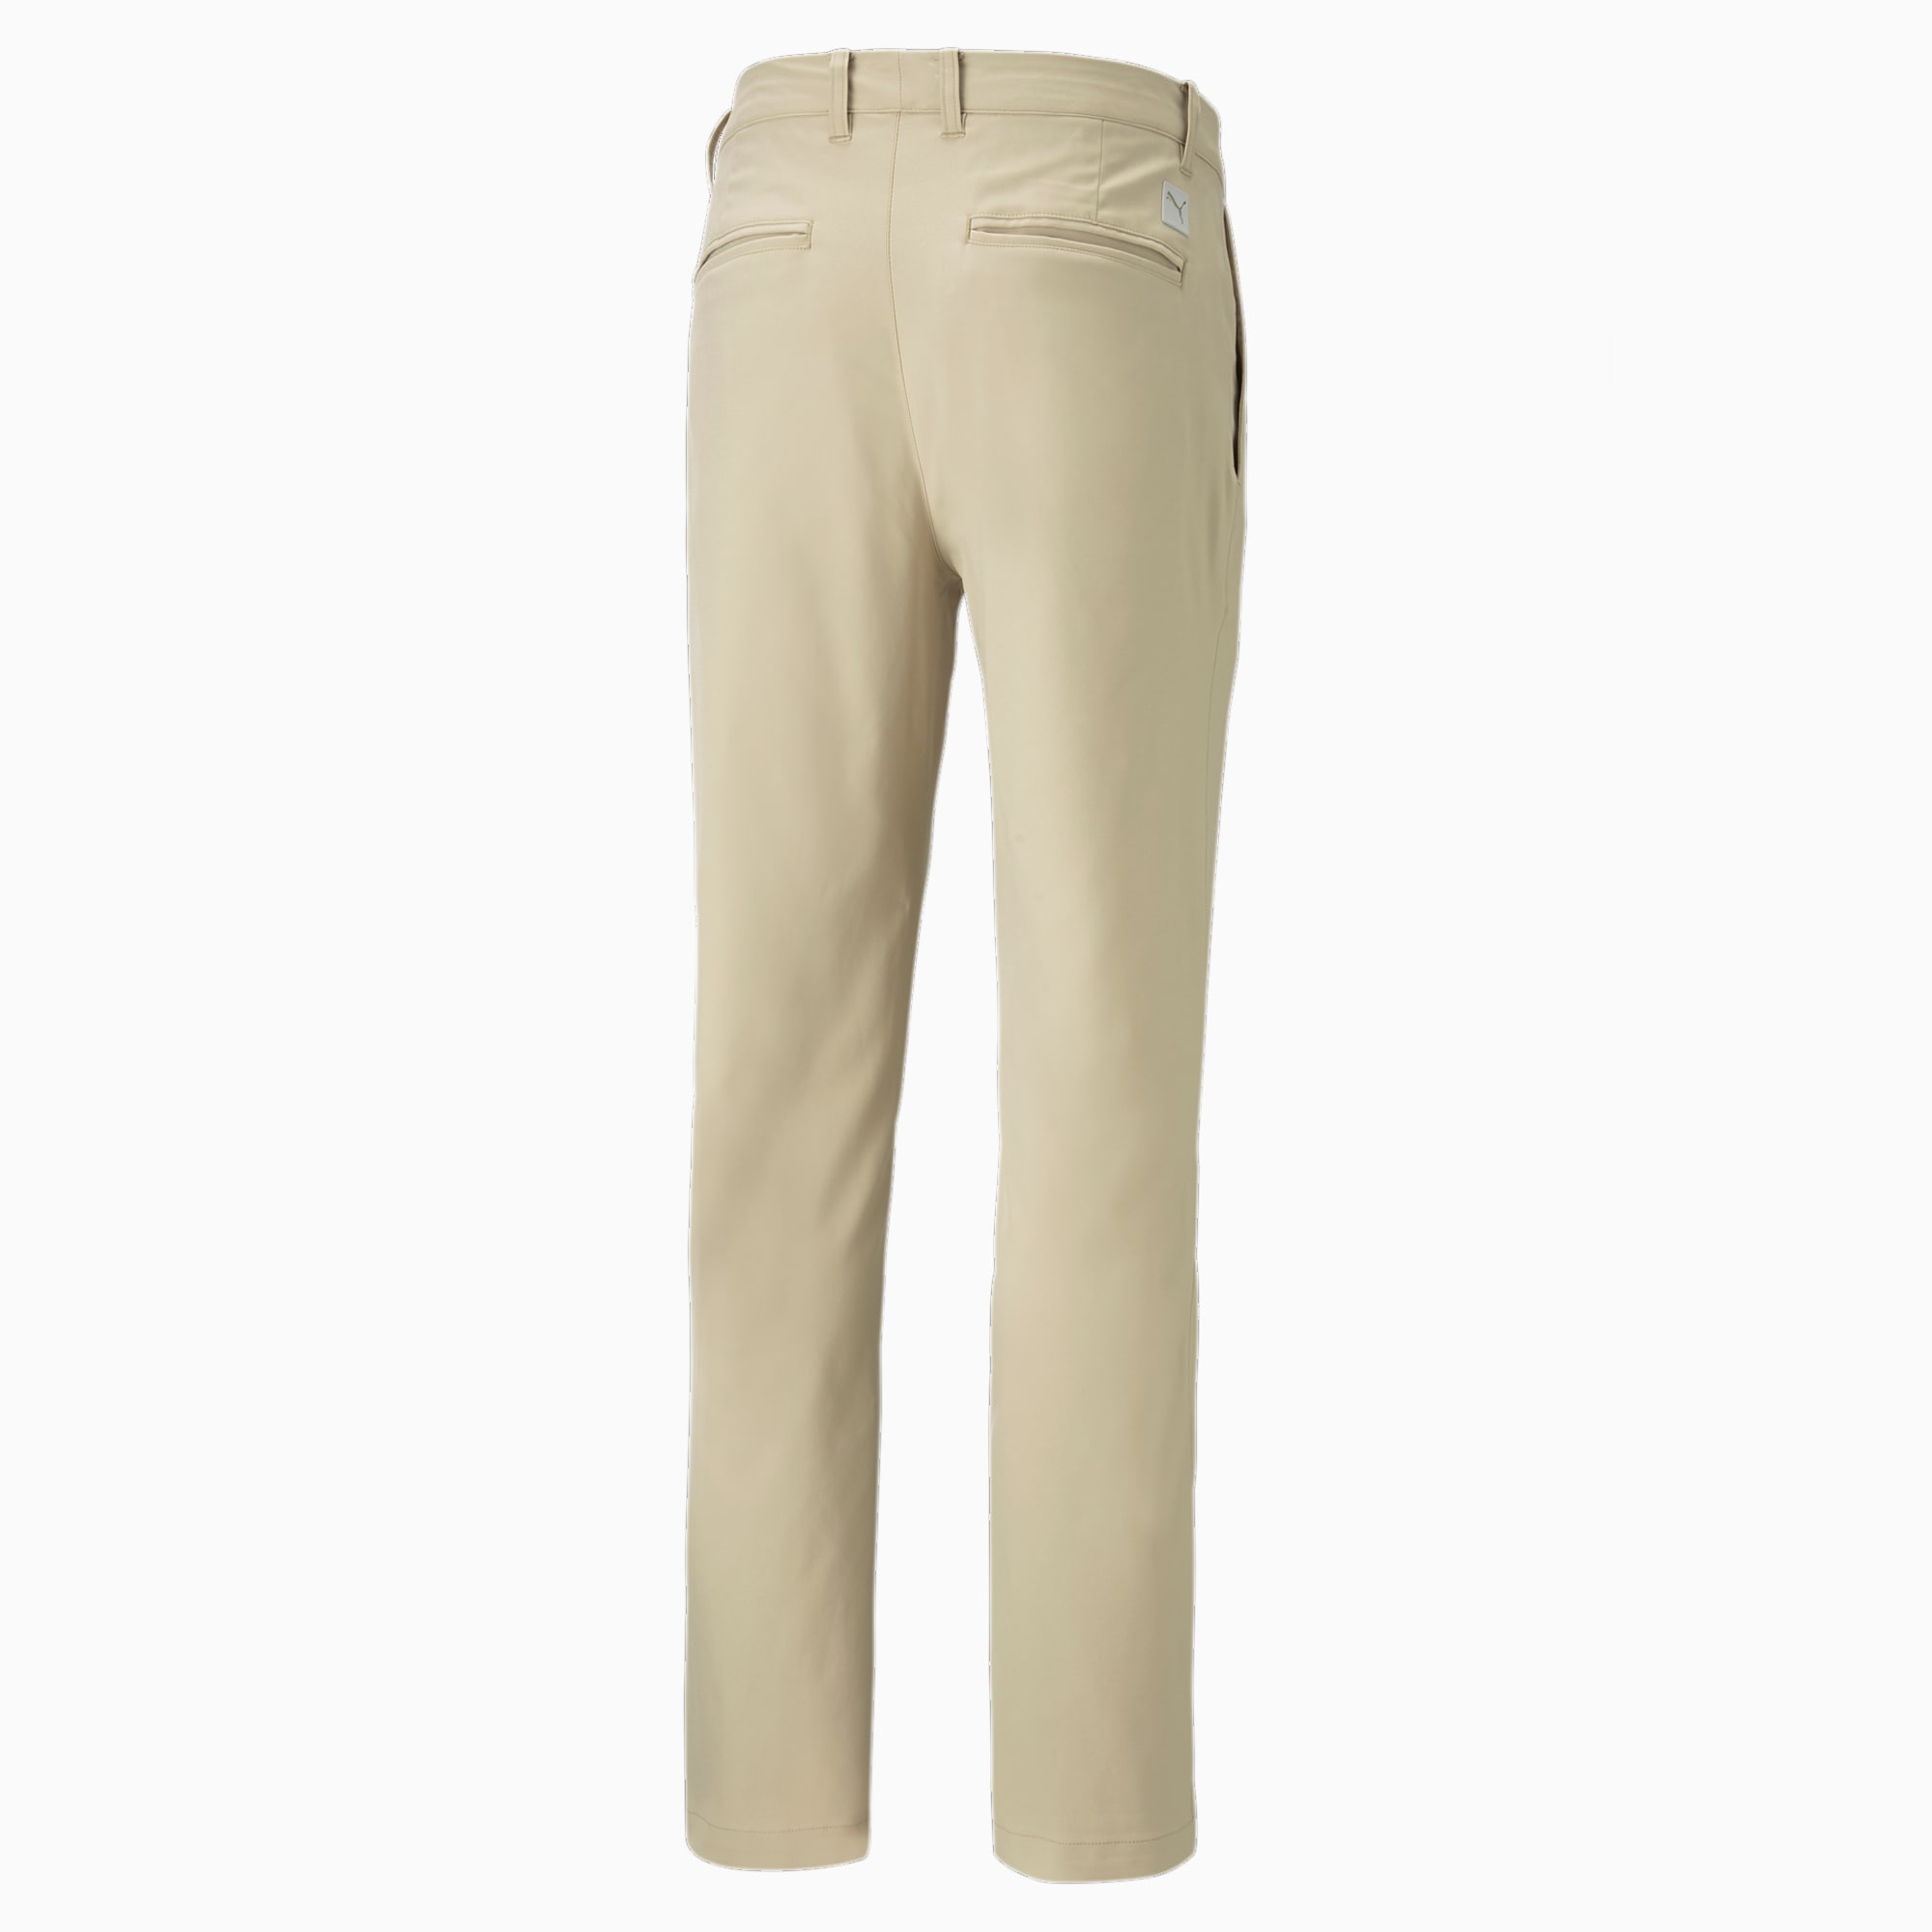 PUMA Dealer Tailored Golf Pants Men, Alabaster, Size 33/30, Clothing